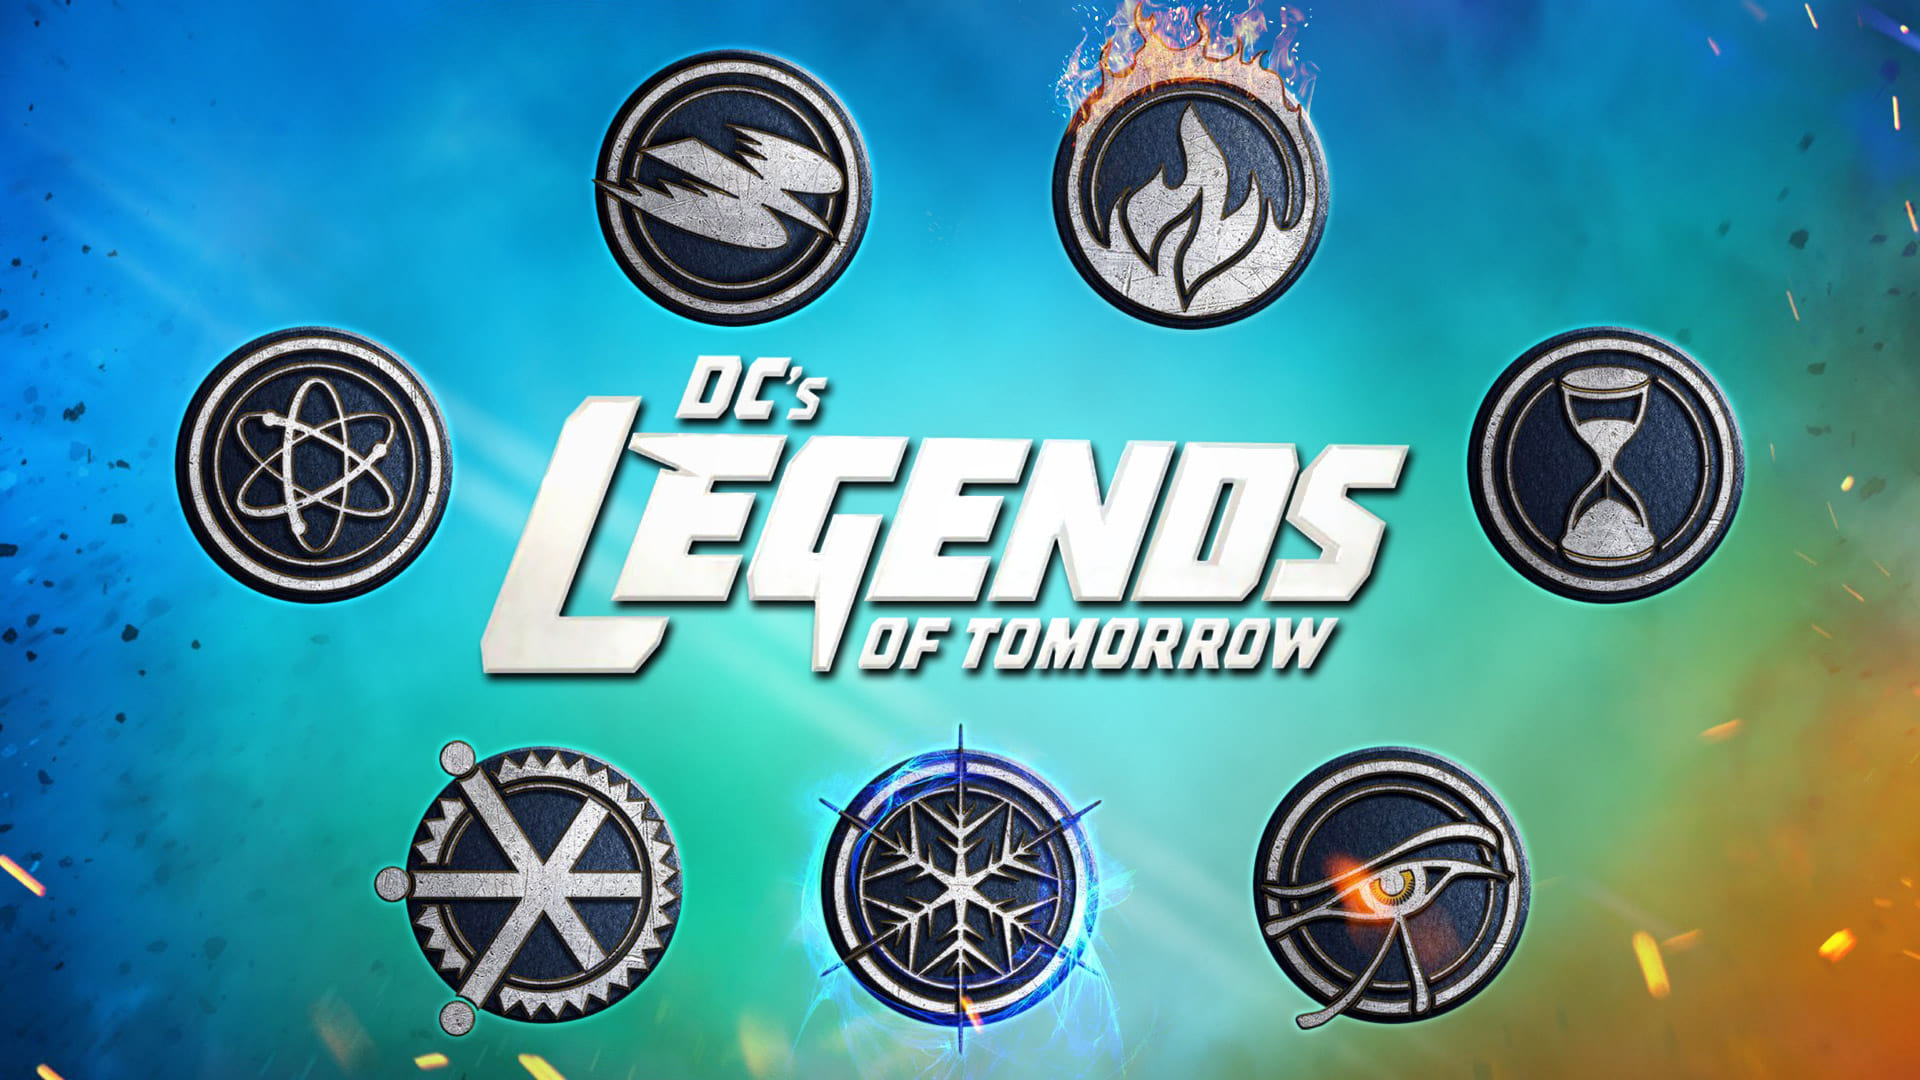 DC's Legends of Tomorrow - Season 1 Episode 1